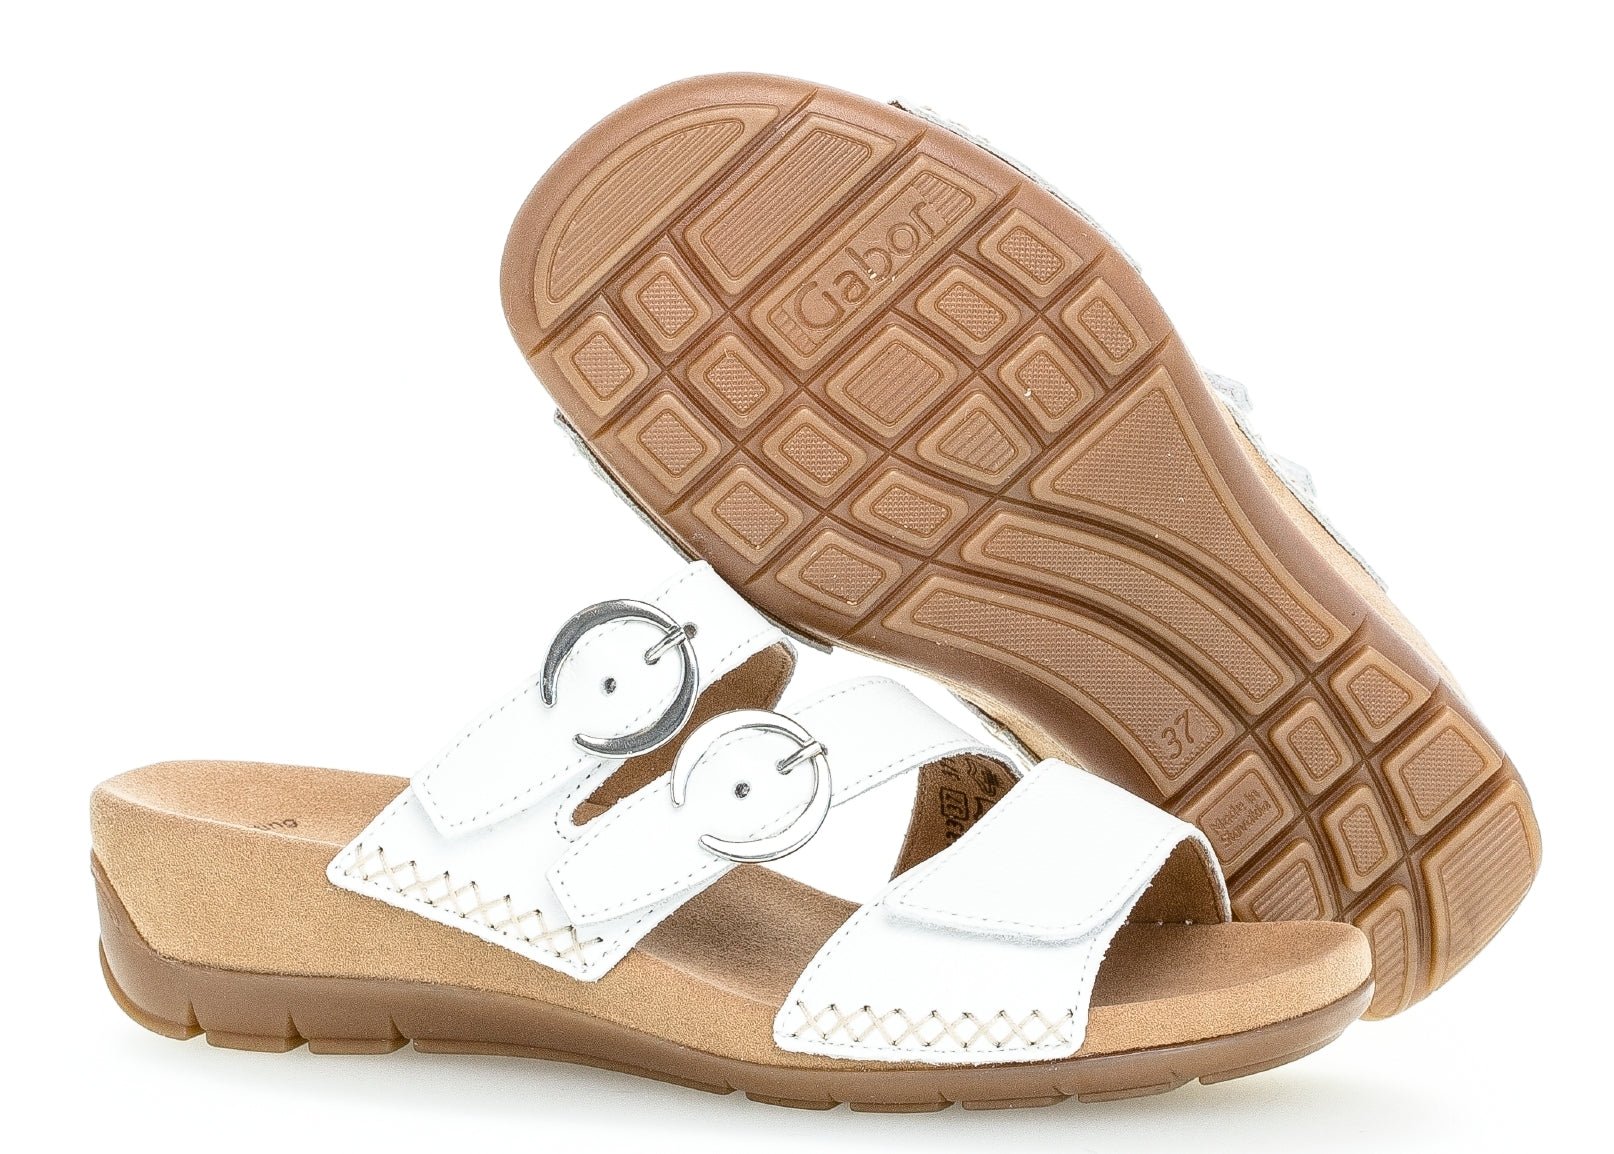 Gabor 63.733.21 women sandals - white leather - ChaplinshoesGabor 63.733.21 women sandals - white leatherGabor